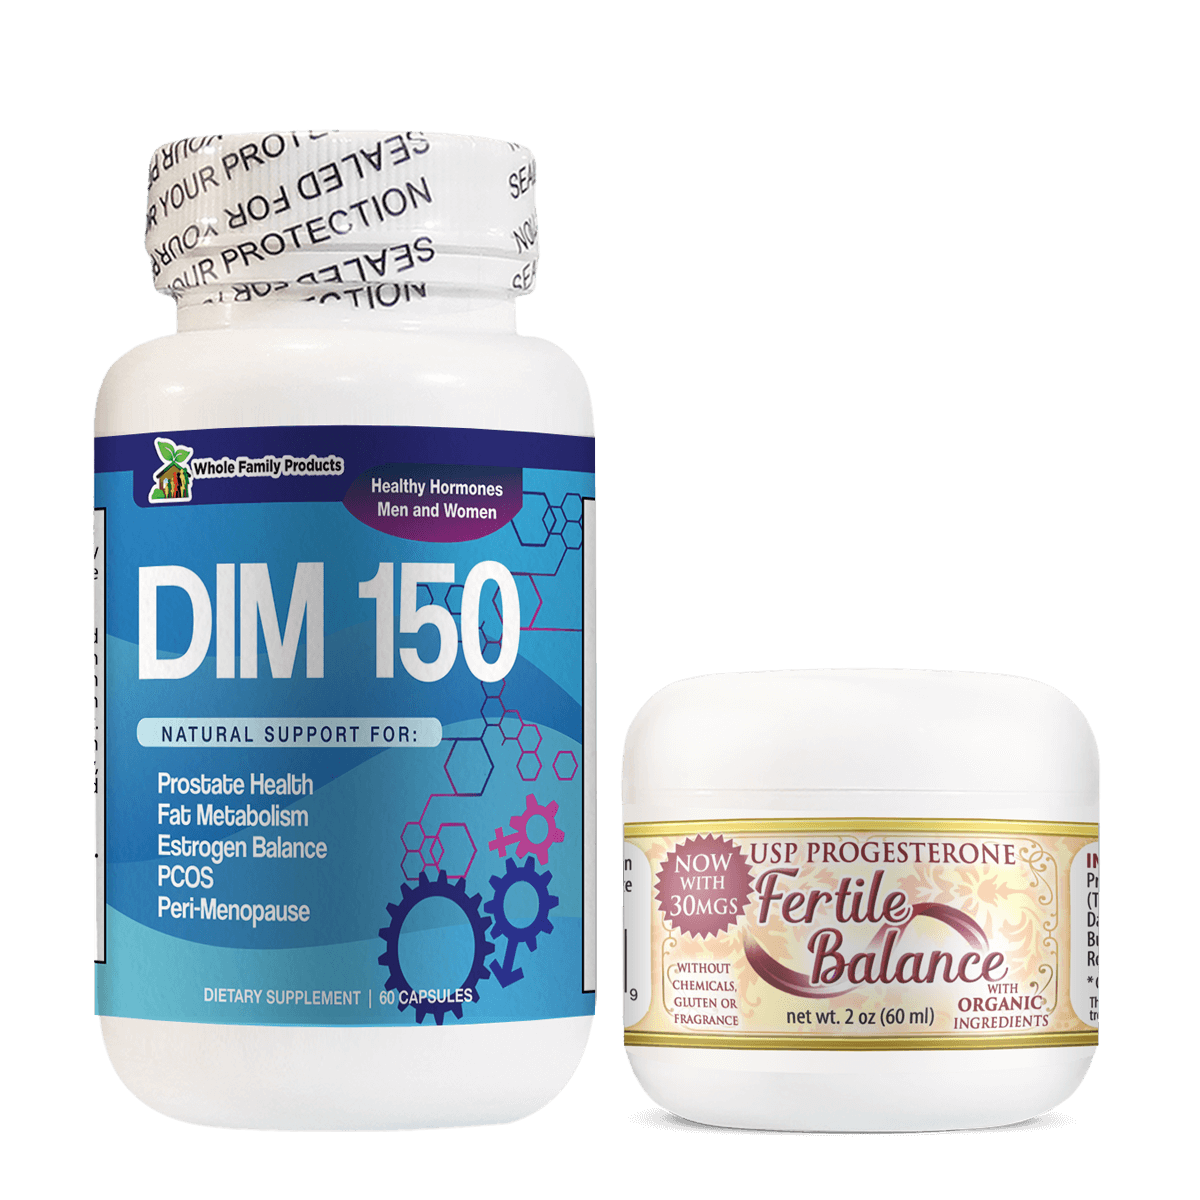 Dim150 and Fertile Balance Product Bundles